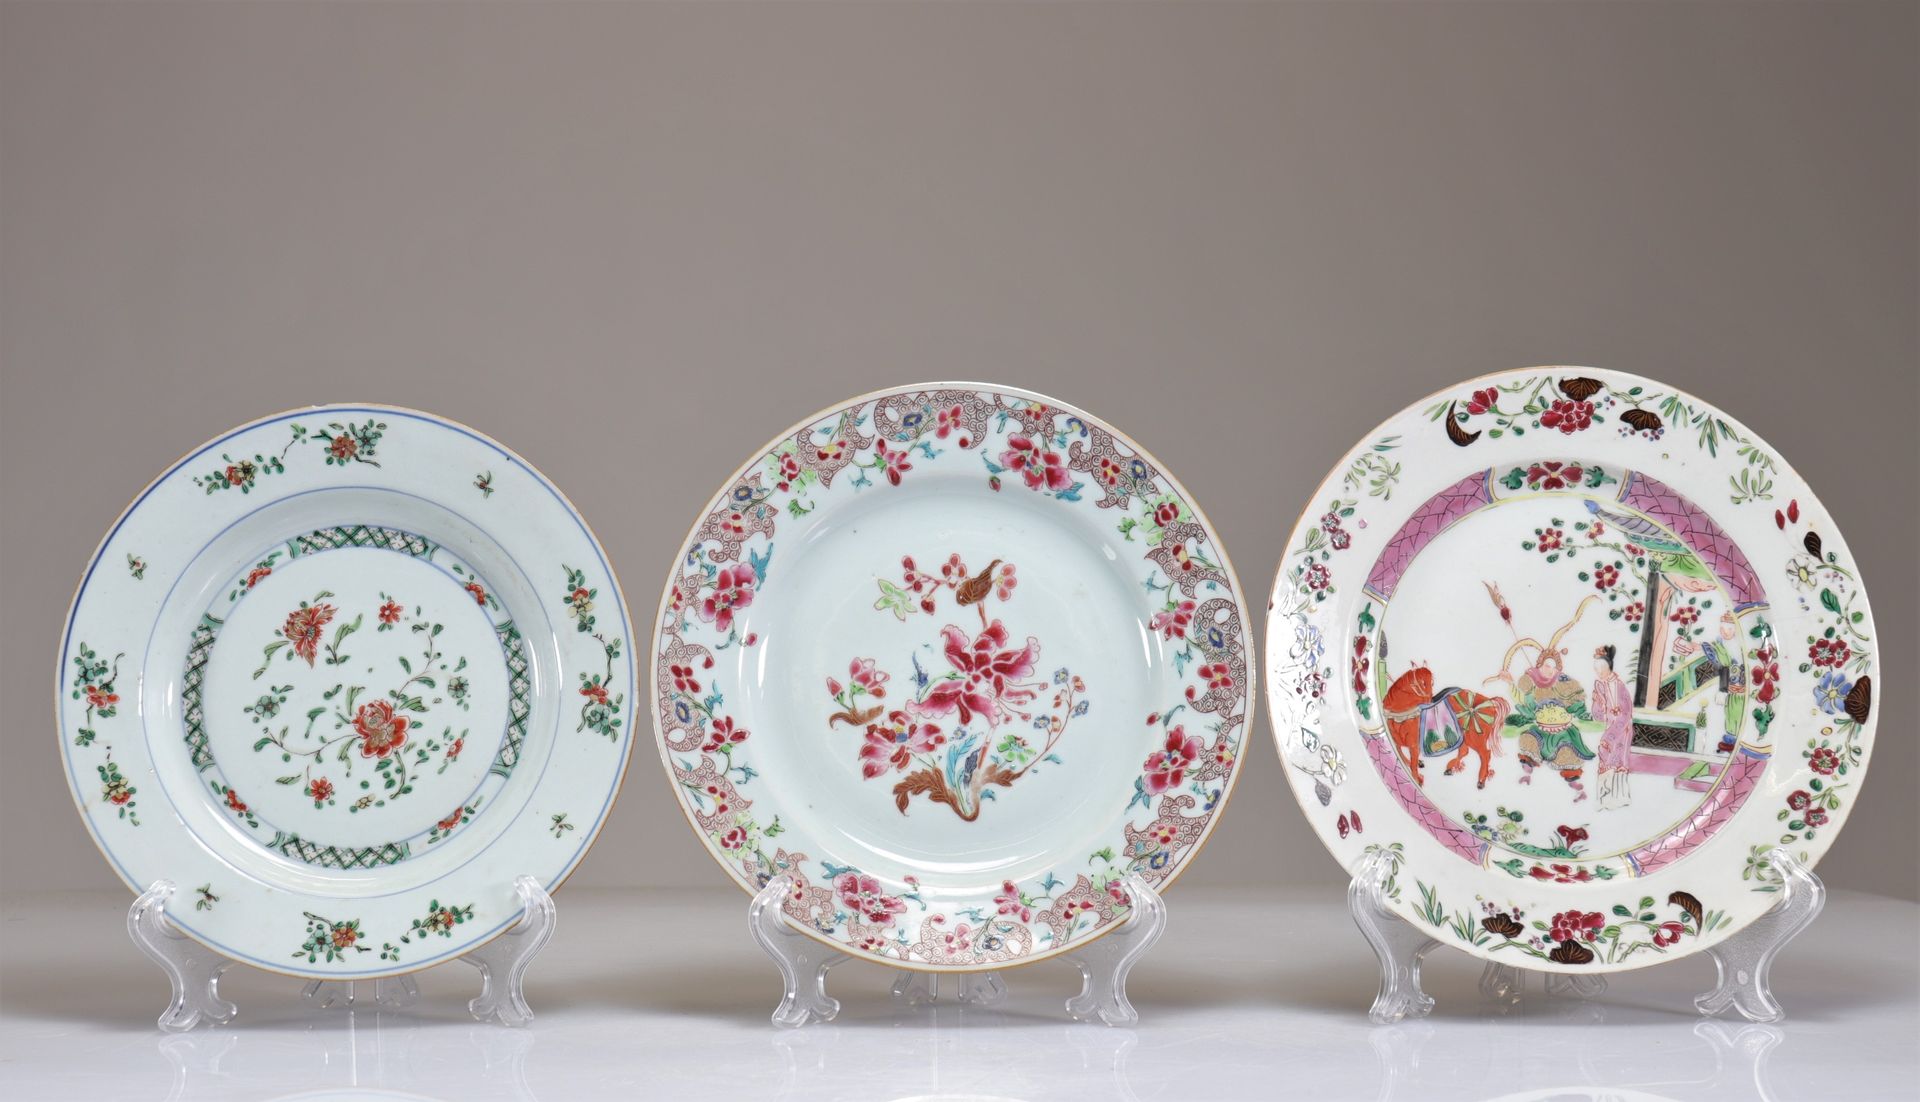 Null Plates (3) porcelain XVIIIth century famille rose
weight: 990 g
Delivery av&hellip;